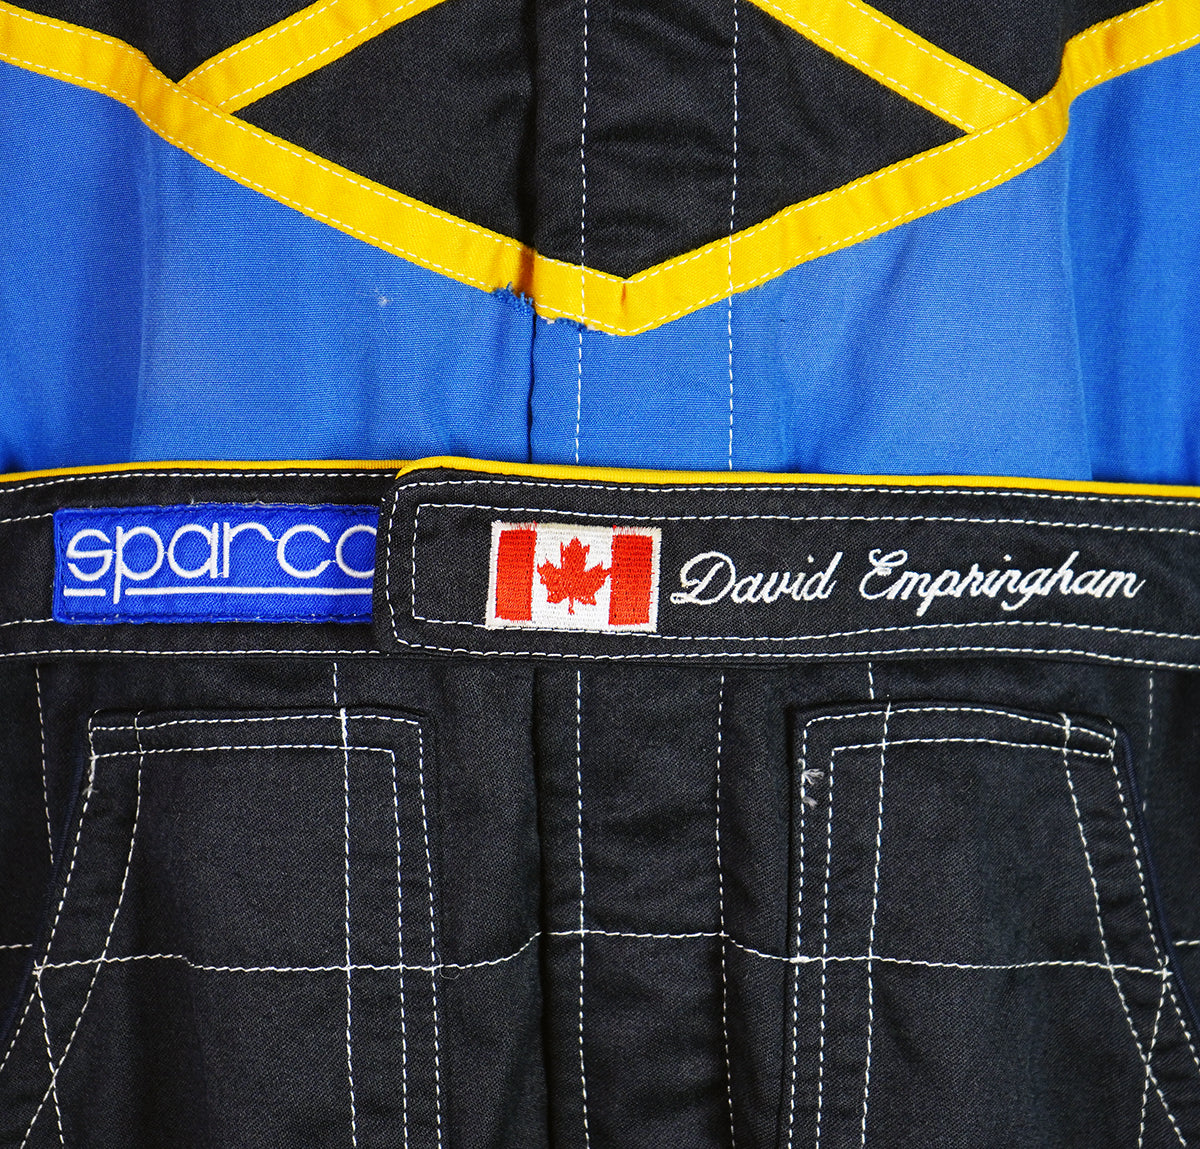 1996 David Empringham Championship Winning Players Indy Lights Suit